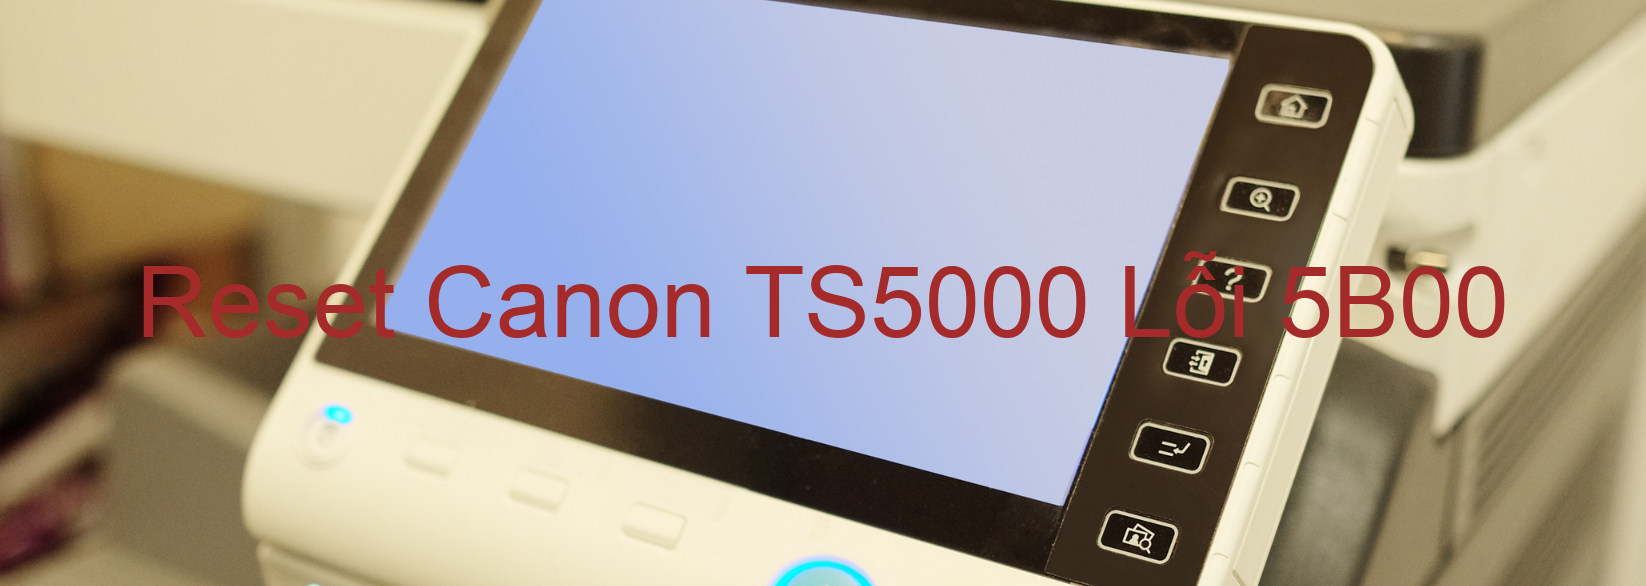 Reset Canon TS5000 Lỗi 5B00